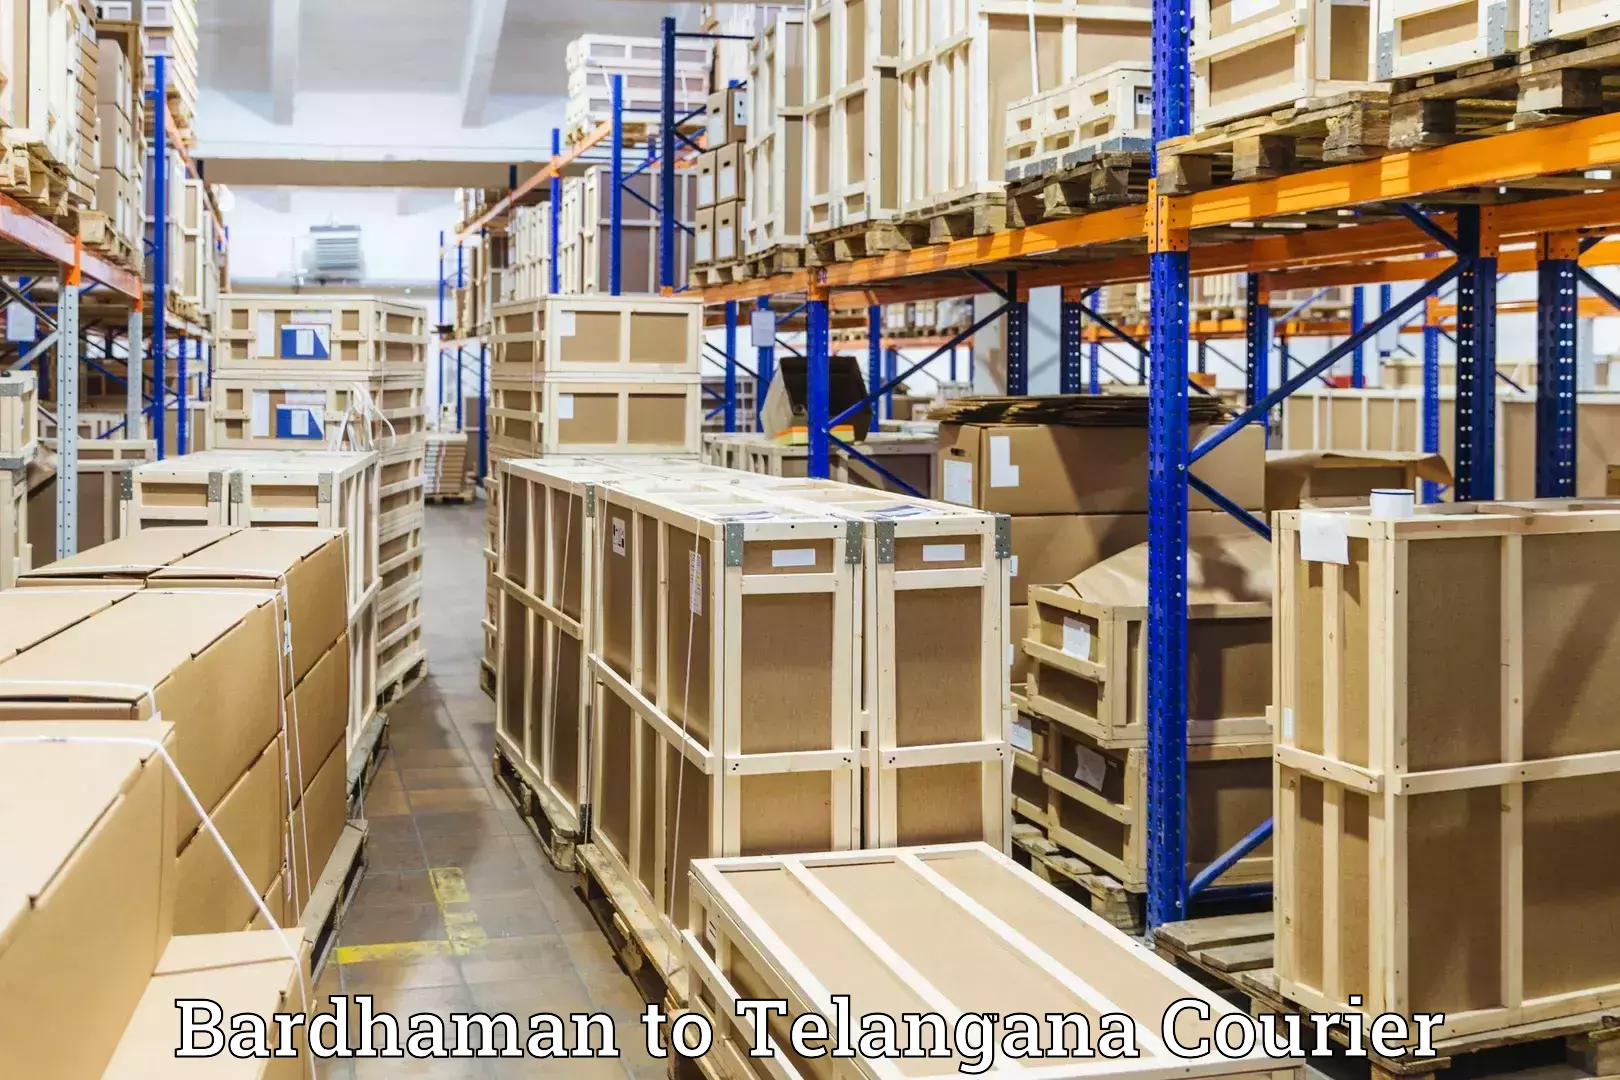 Luggage shipment specialists Bardhaman to Tallada